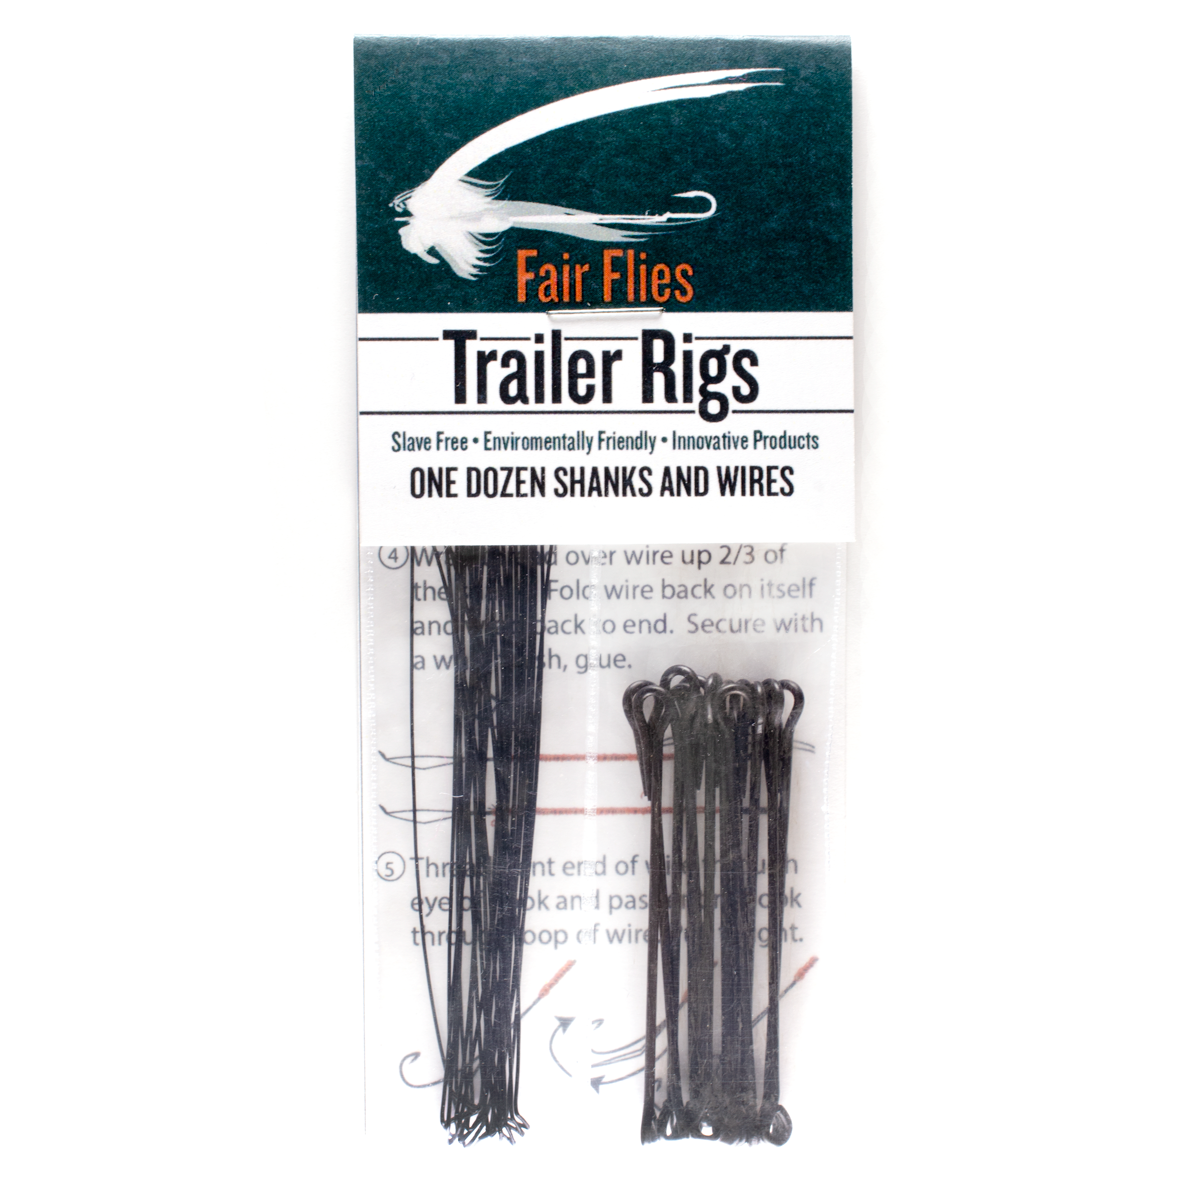 Trailer Rigs in packaging